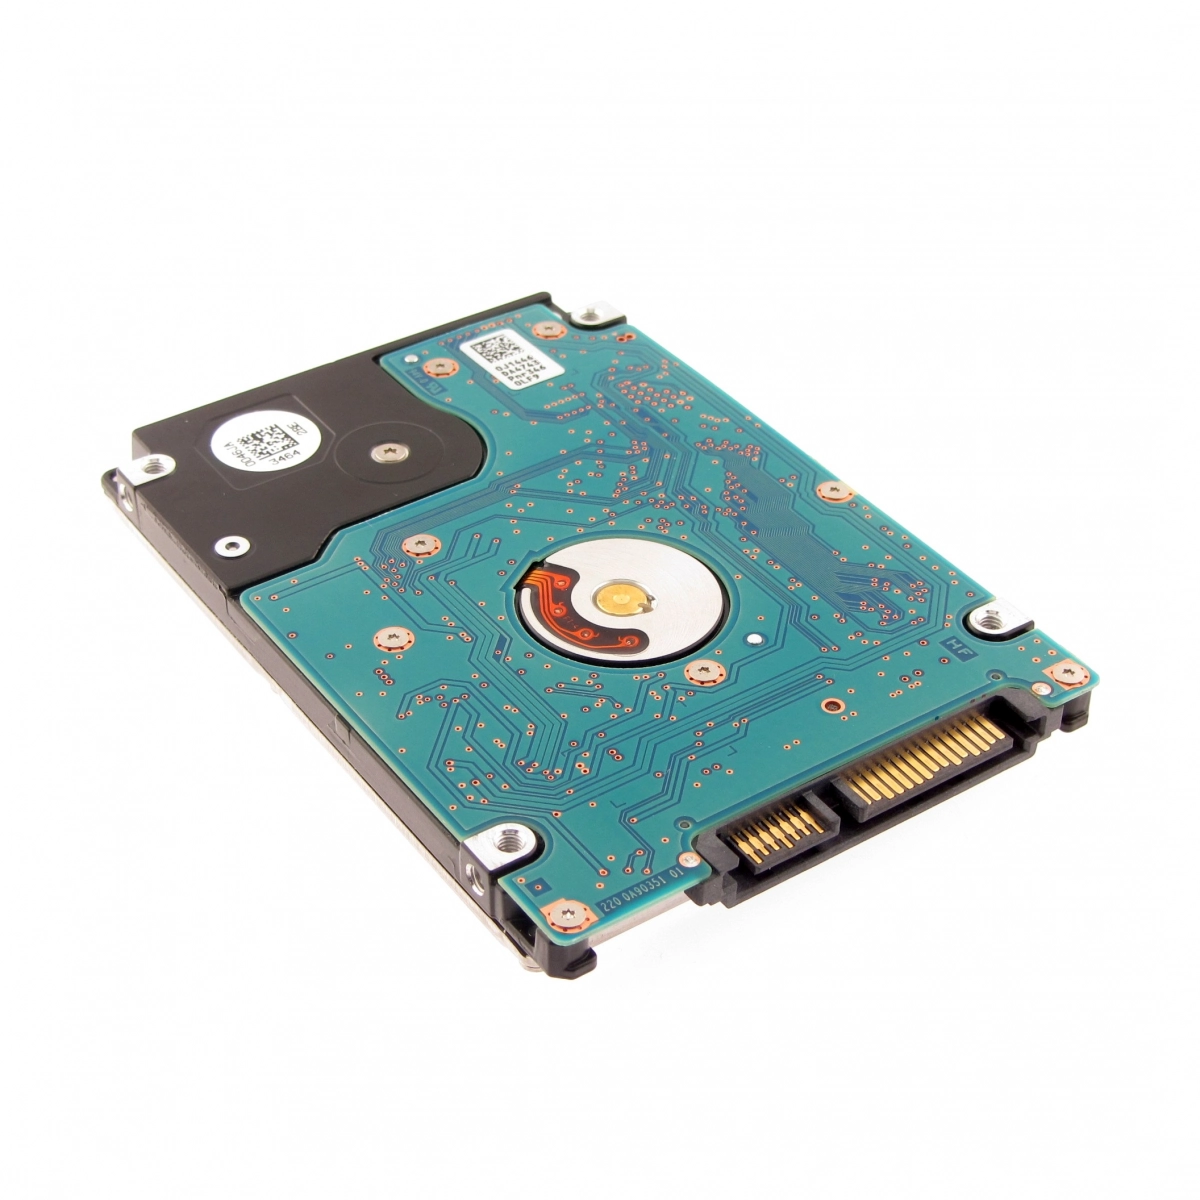 Notebook-Festplatte 1TB, 5400rpm, 128MB für LENOVO ThinkPad T500 (2241)